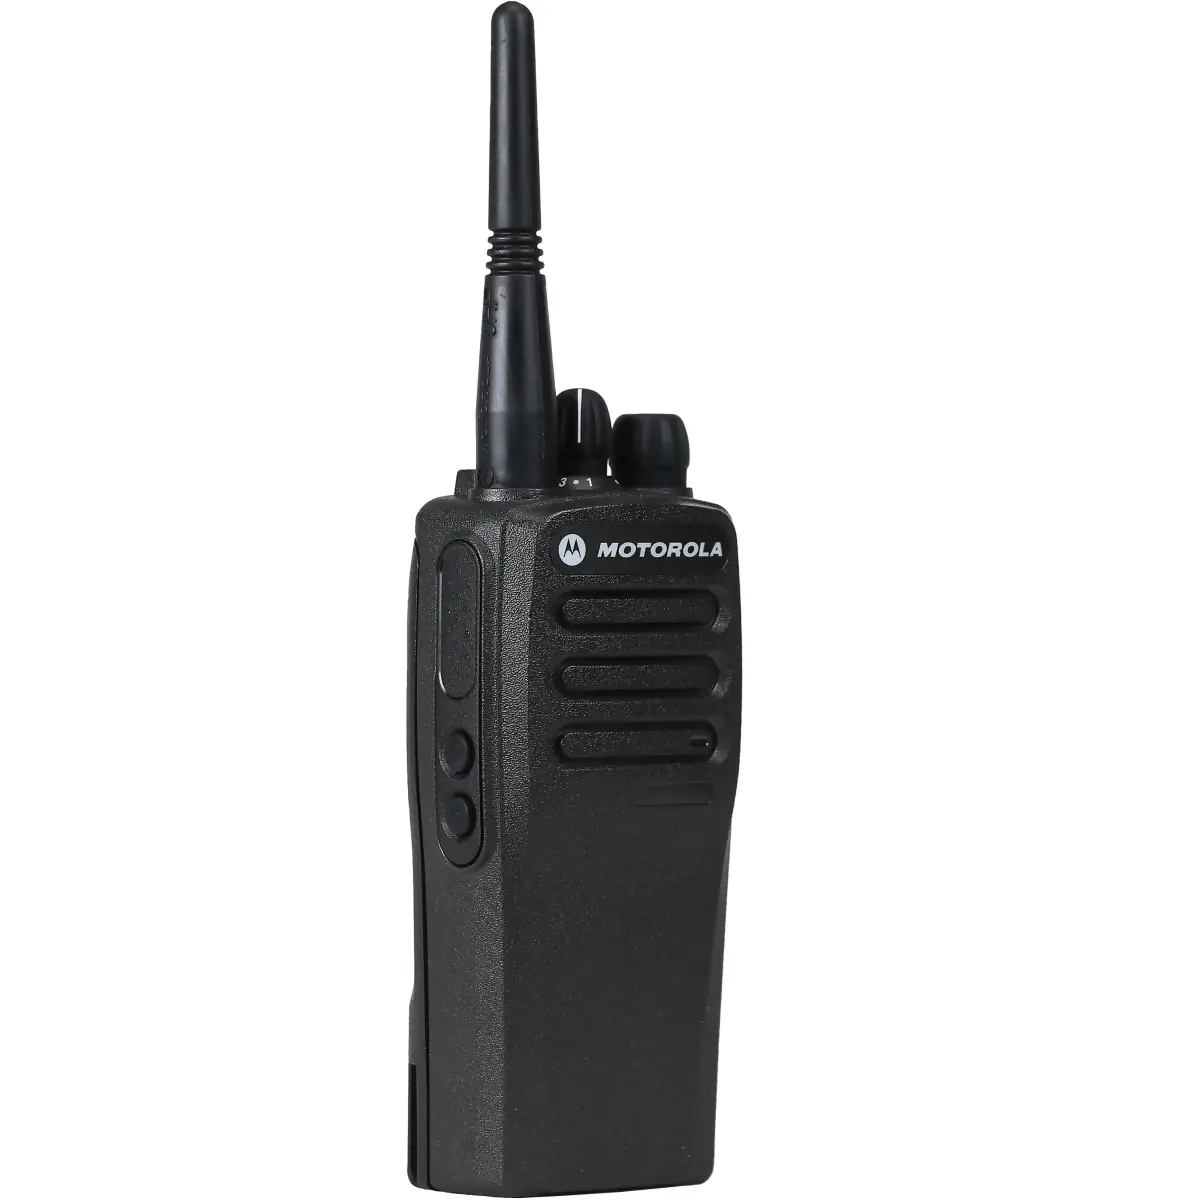 Motorola radio DP1400